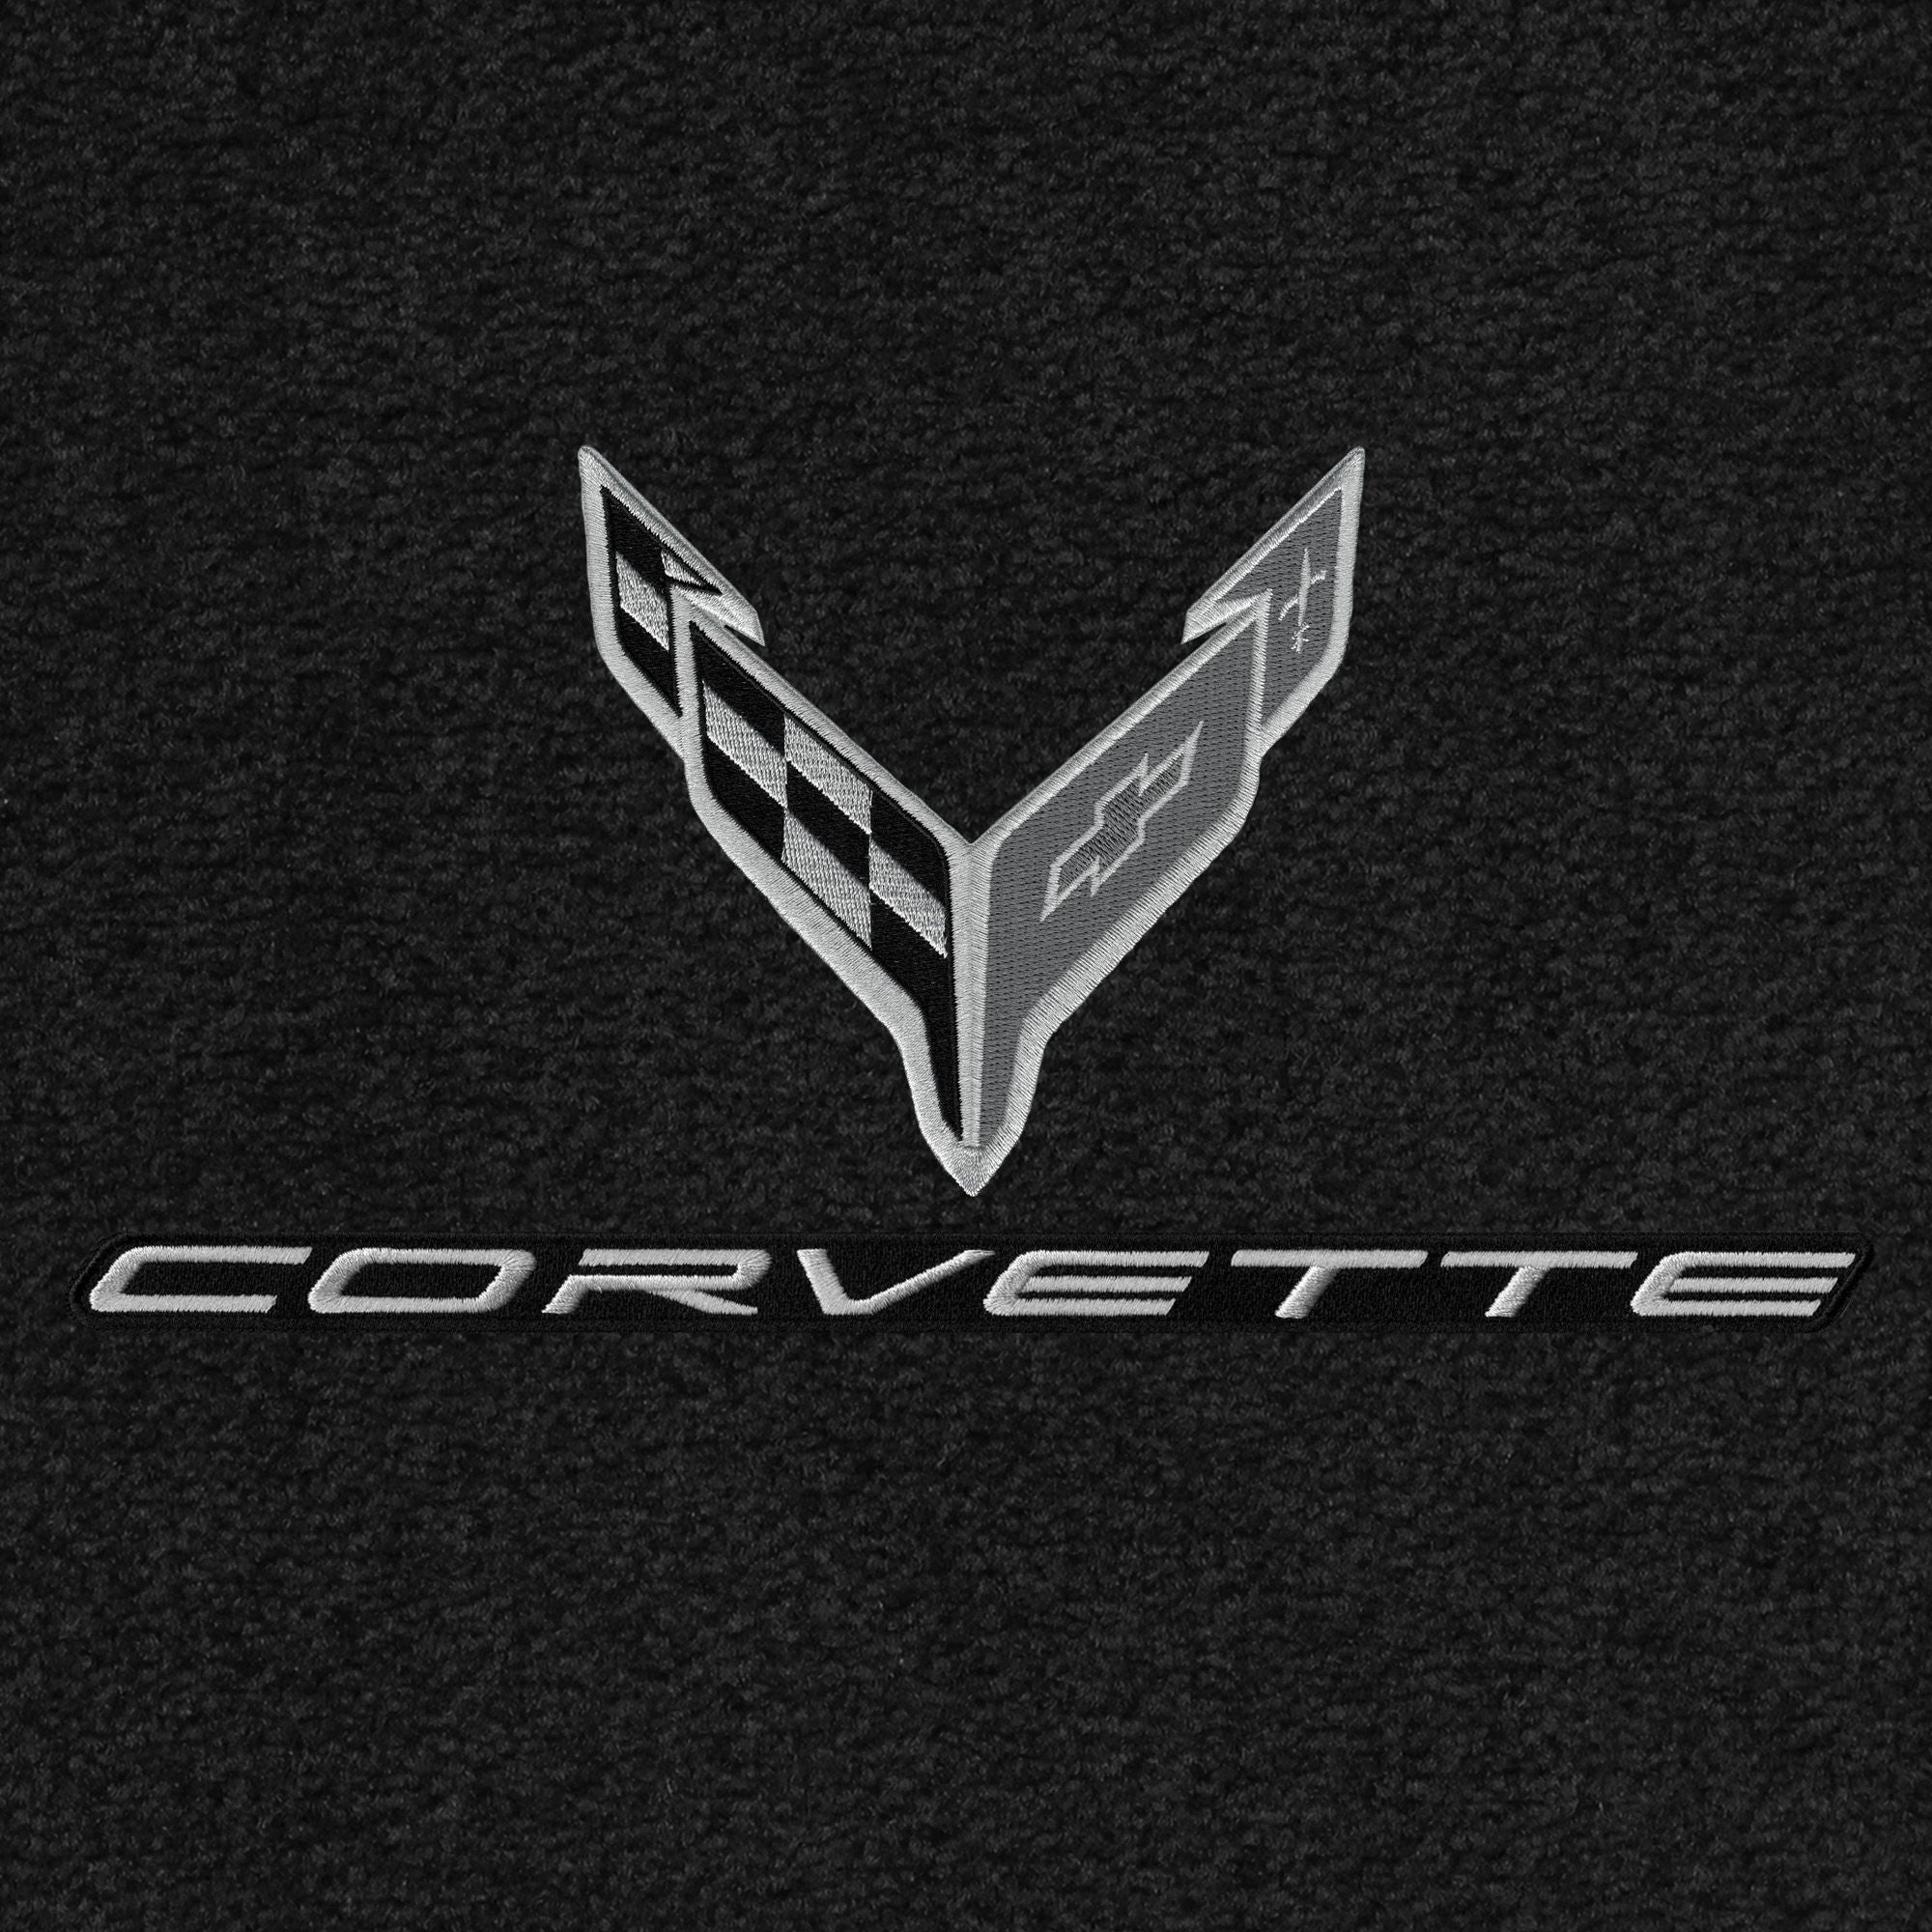 C8 Corvette Floor Mats - Lloyds Mats with C8 Crossed Flags & Corvette Script